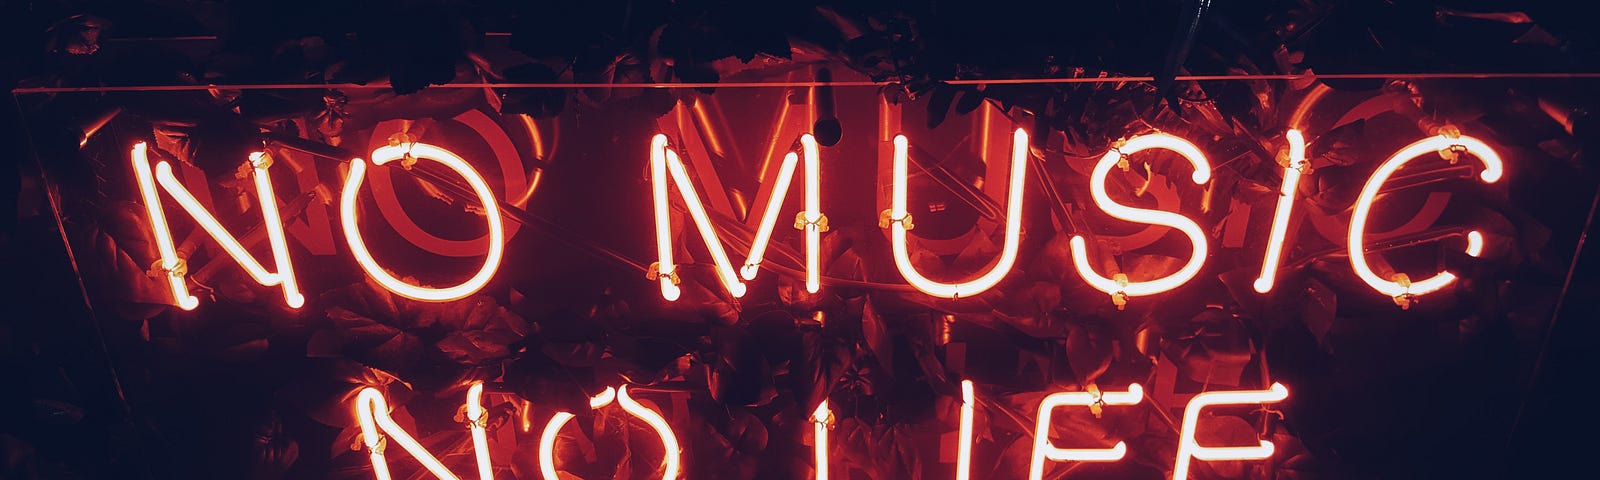 Neon sign reading “NO MUSIC NO LIFE”